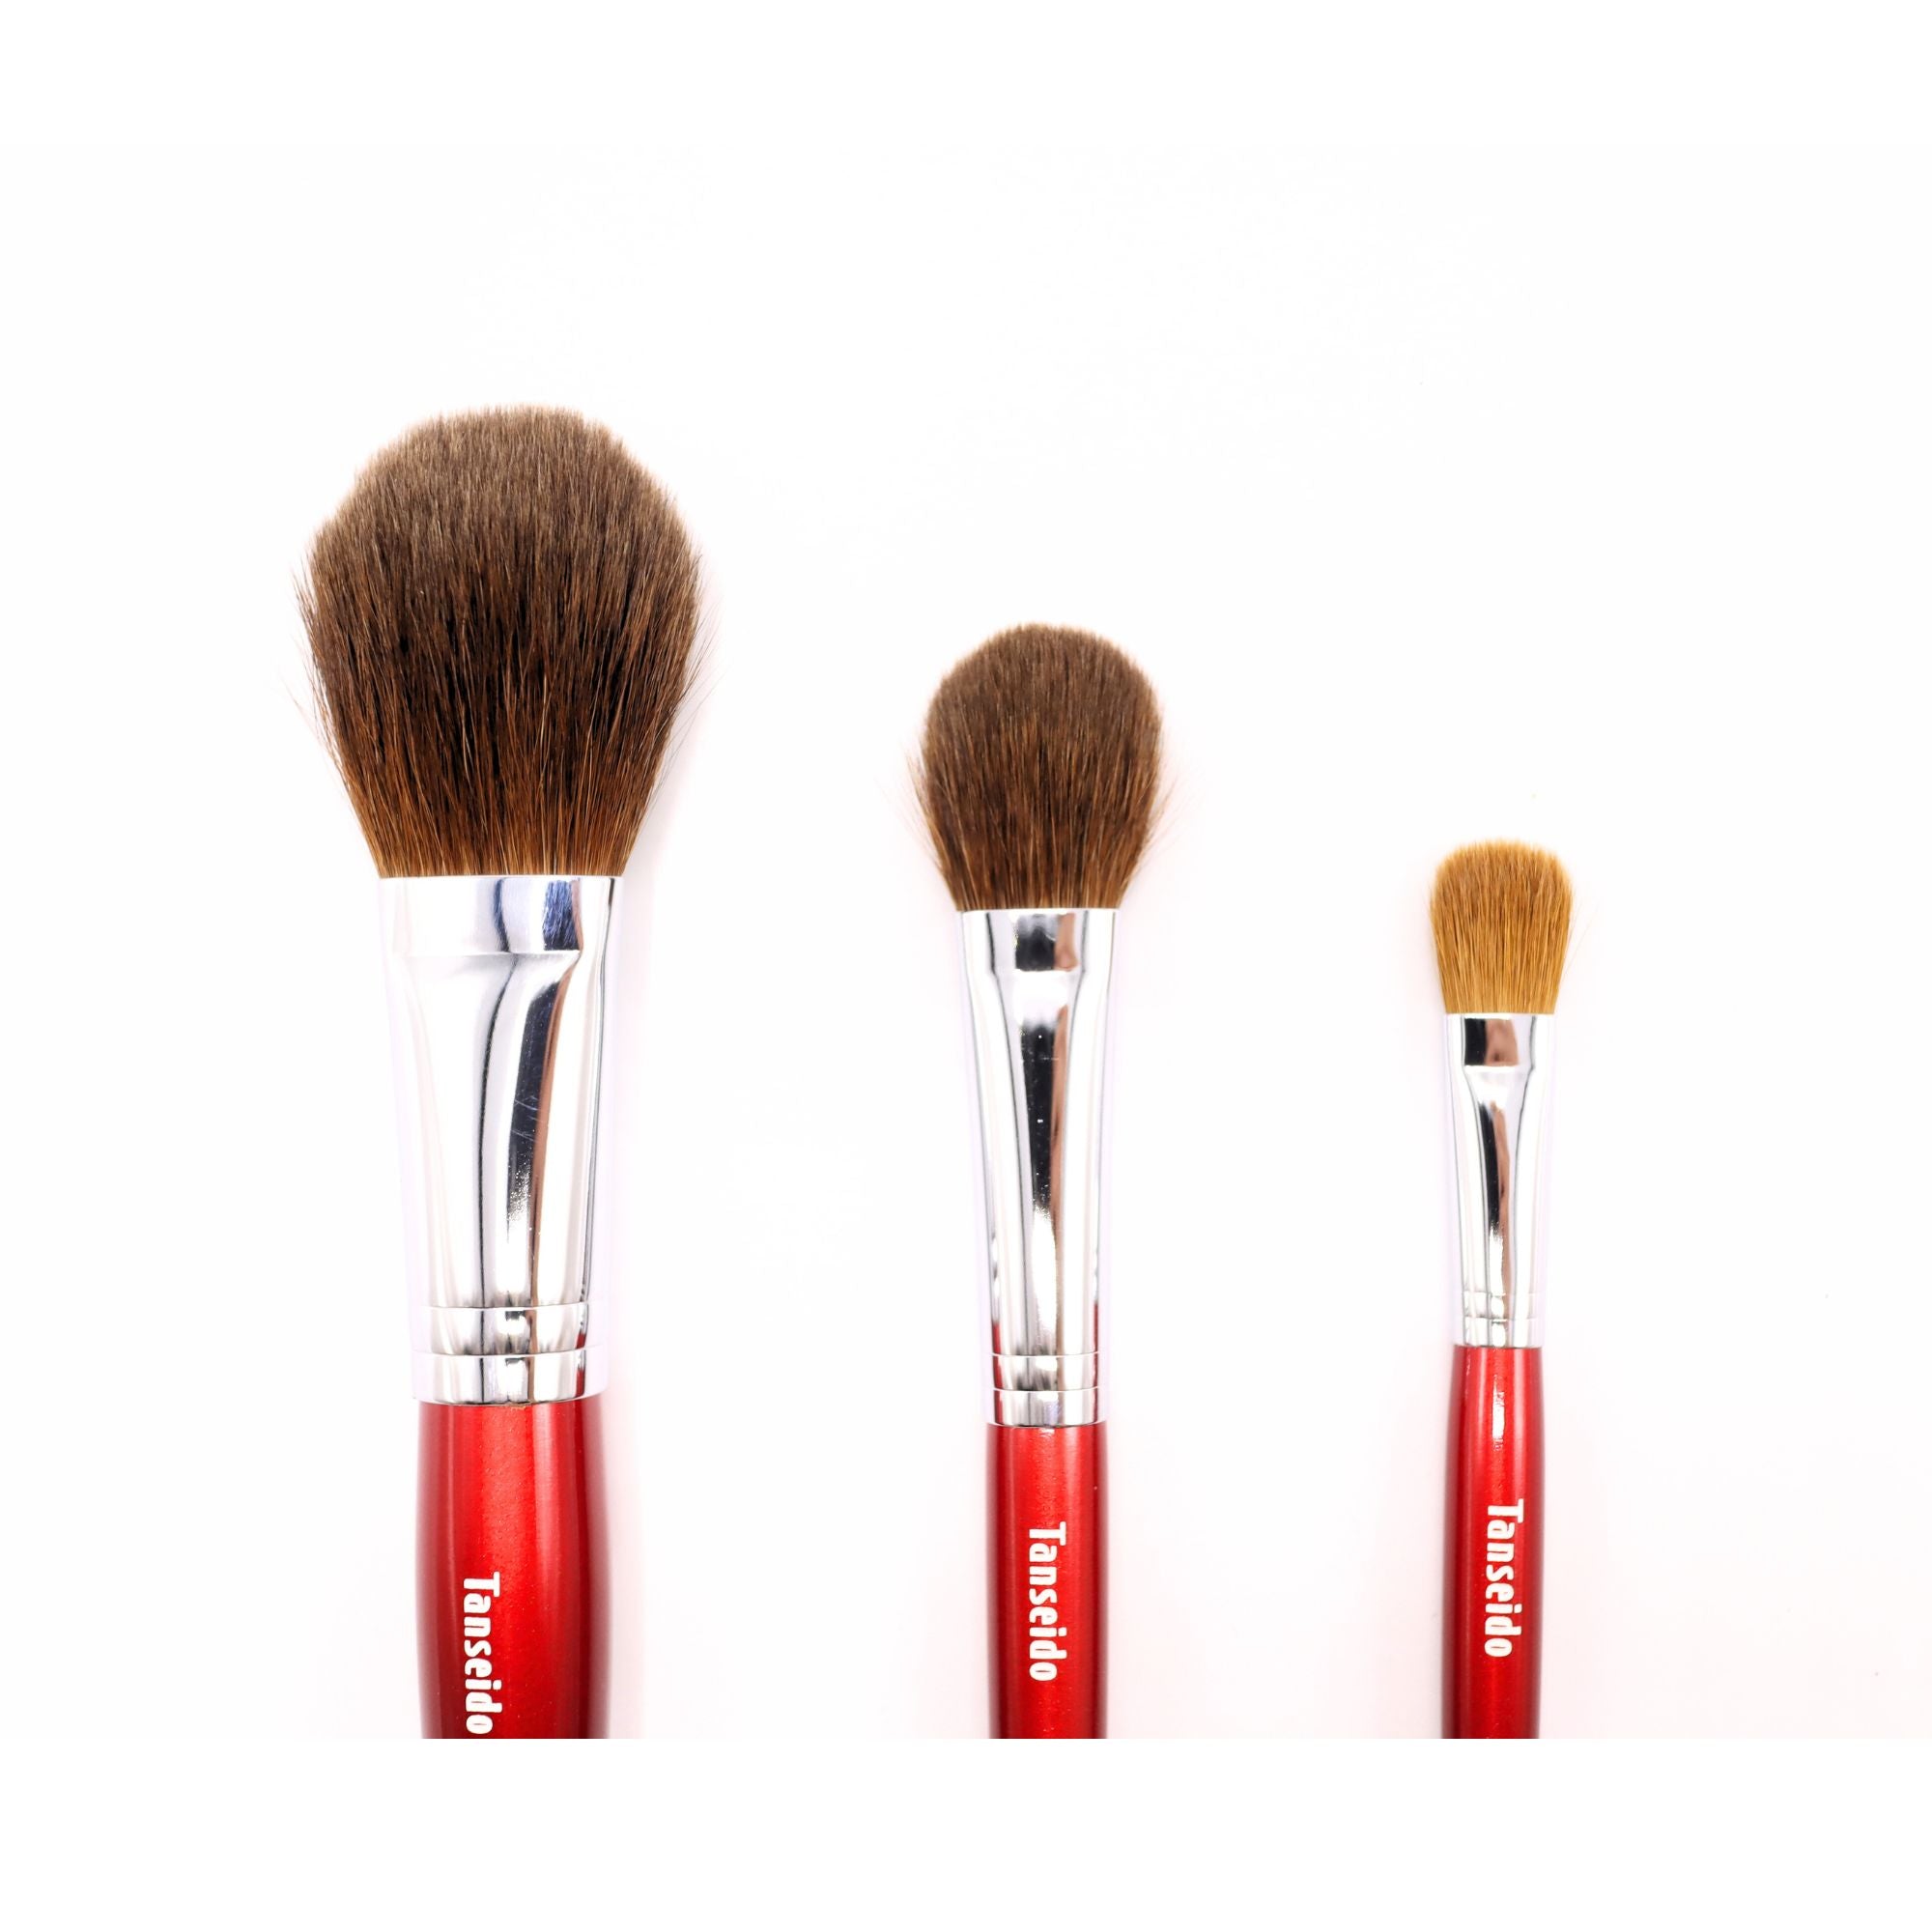 Tanseido AKA 赤 Series 3-Brush Set (Premium Collection) - Fude Beauty, Japanese Makeup Brushes